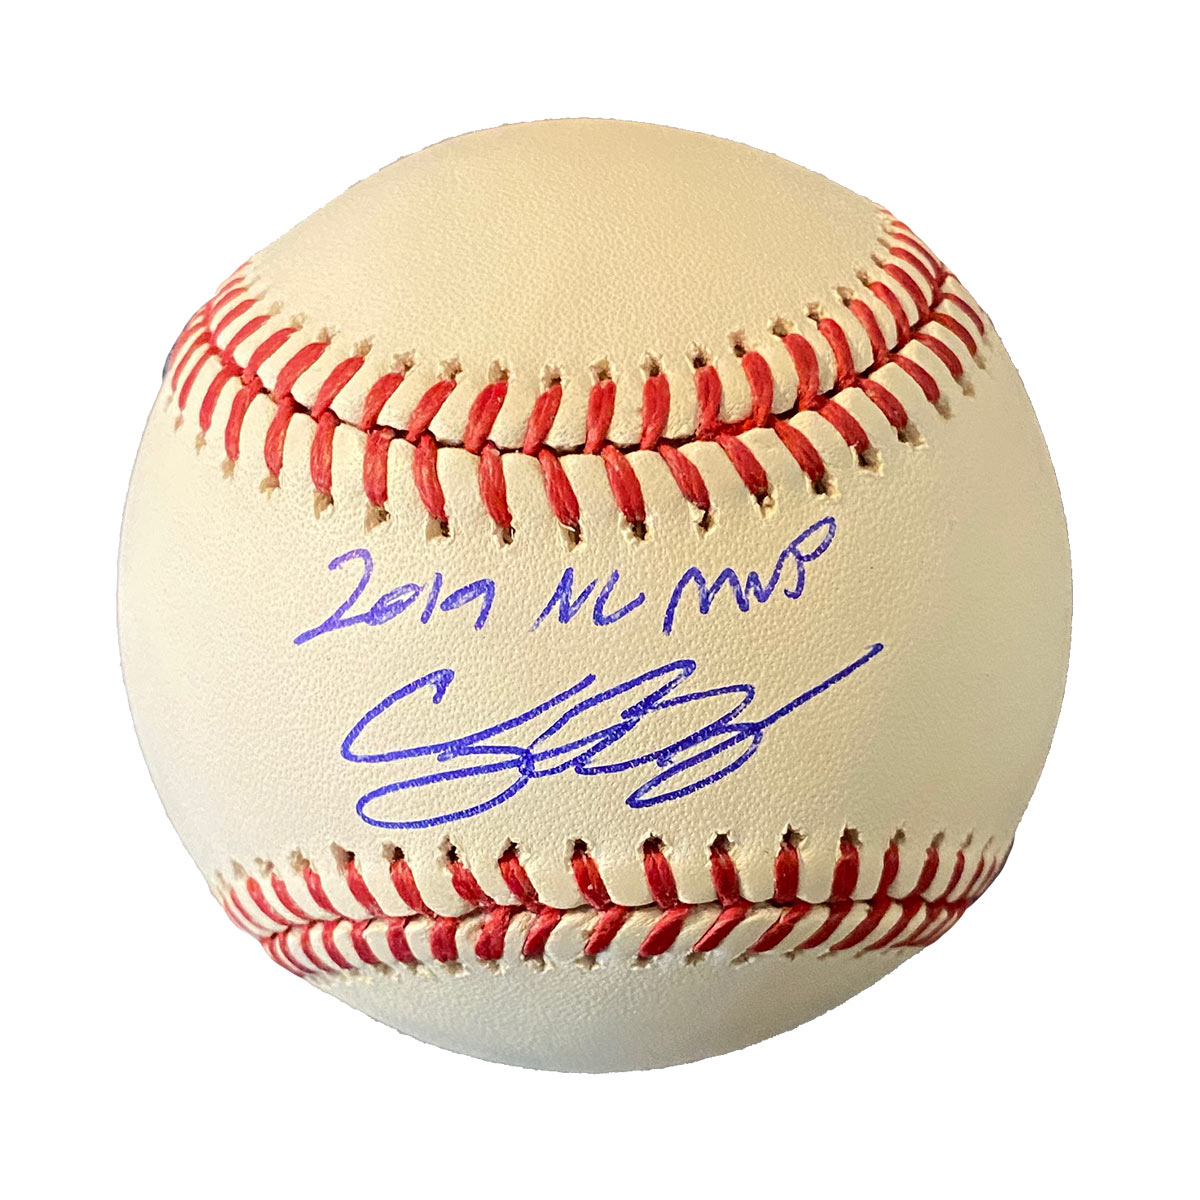 cody bellinger autographed baseball